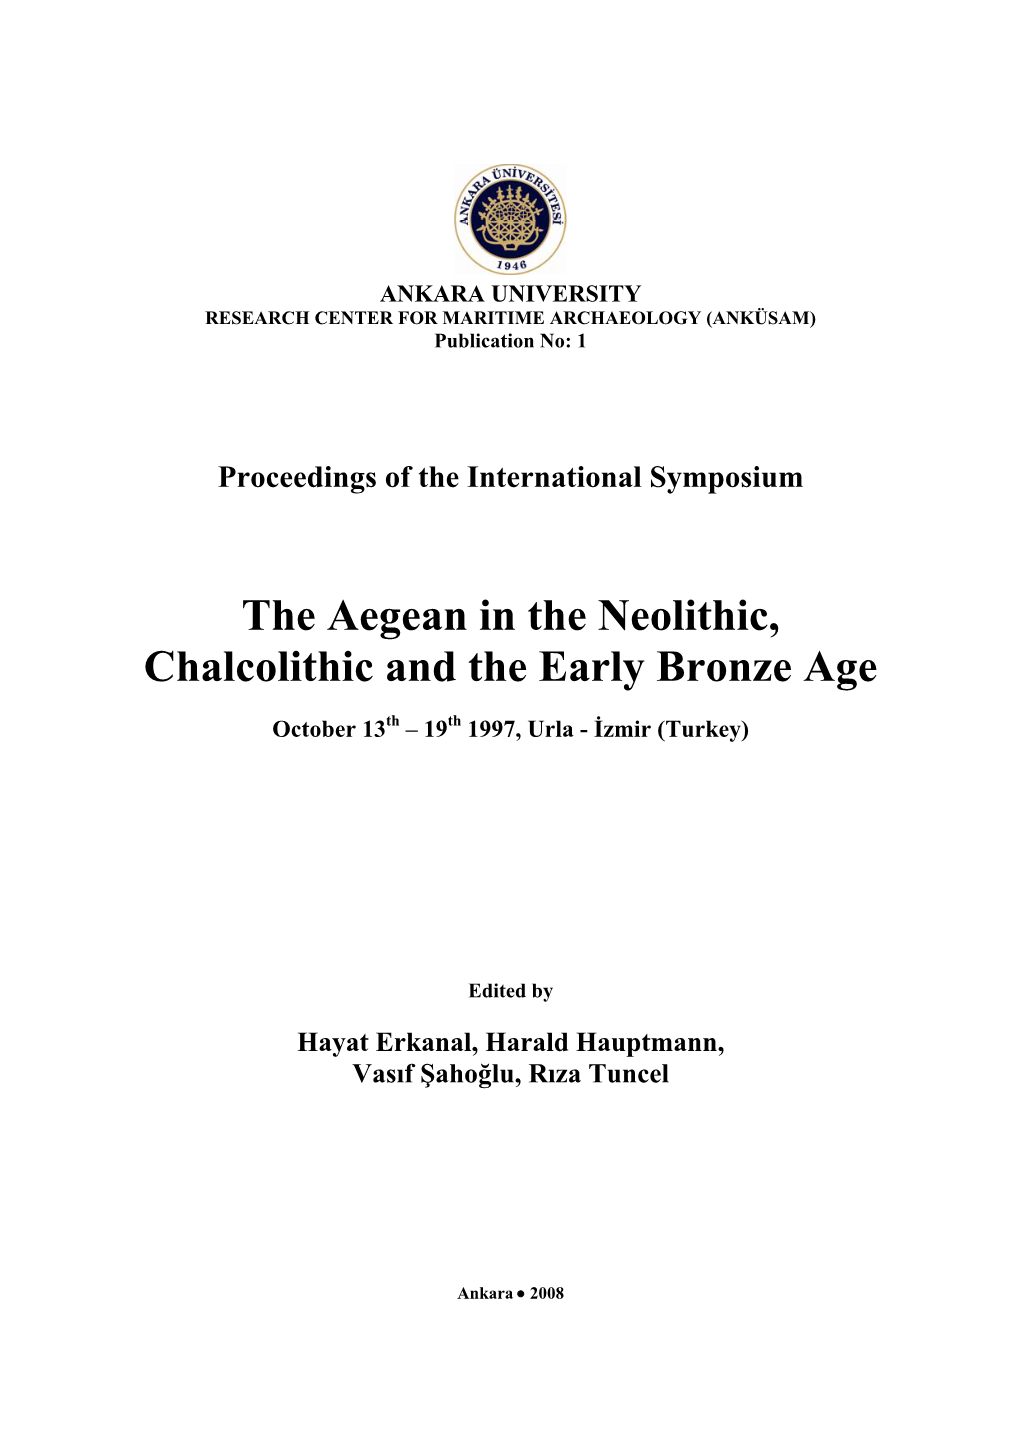 Proceedings of the International Symposium the Aegean